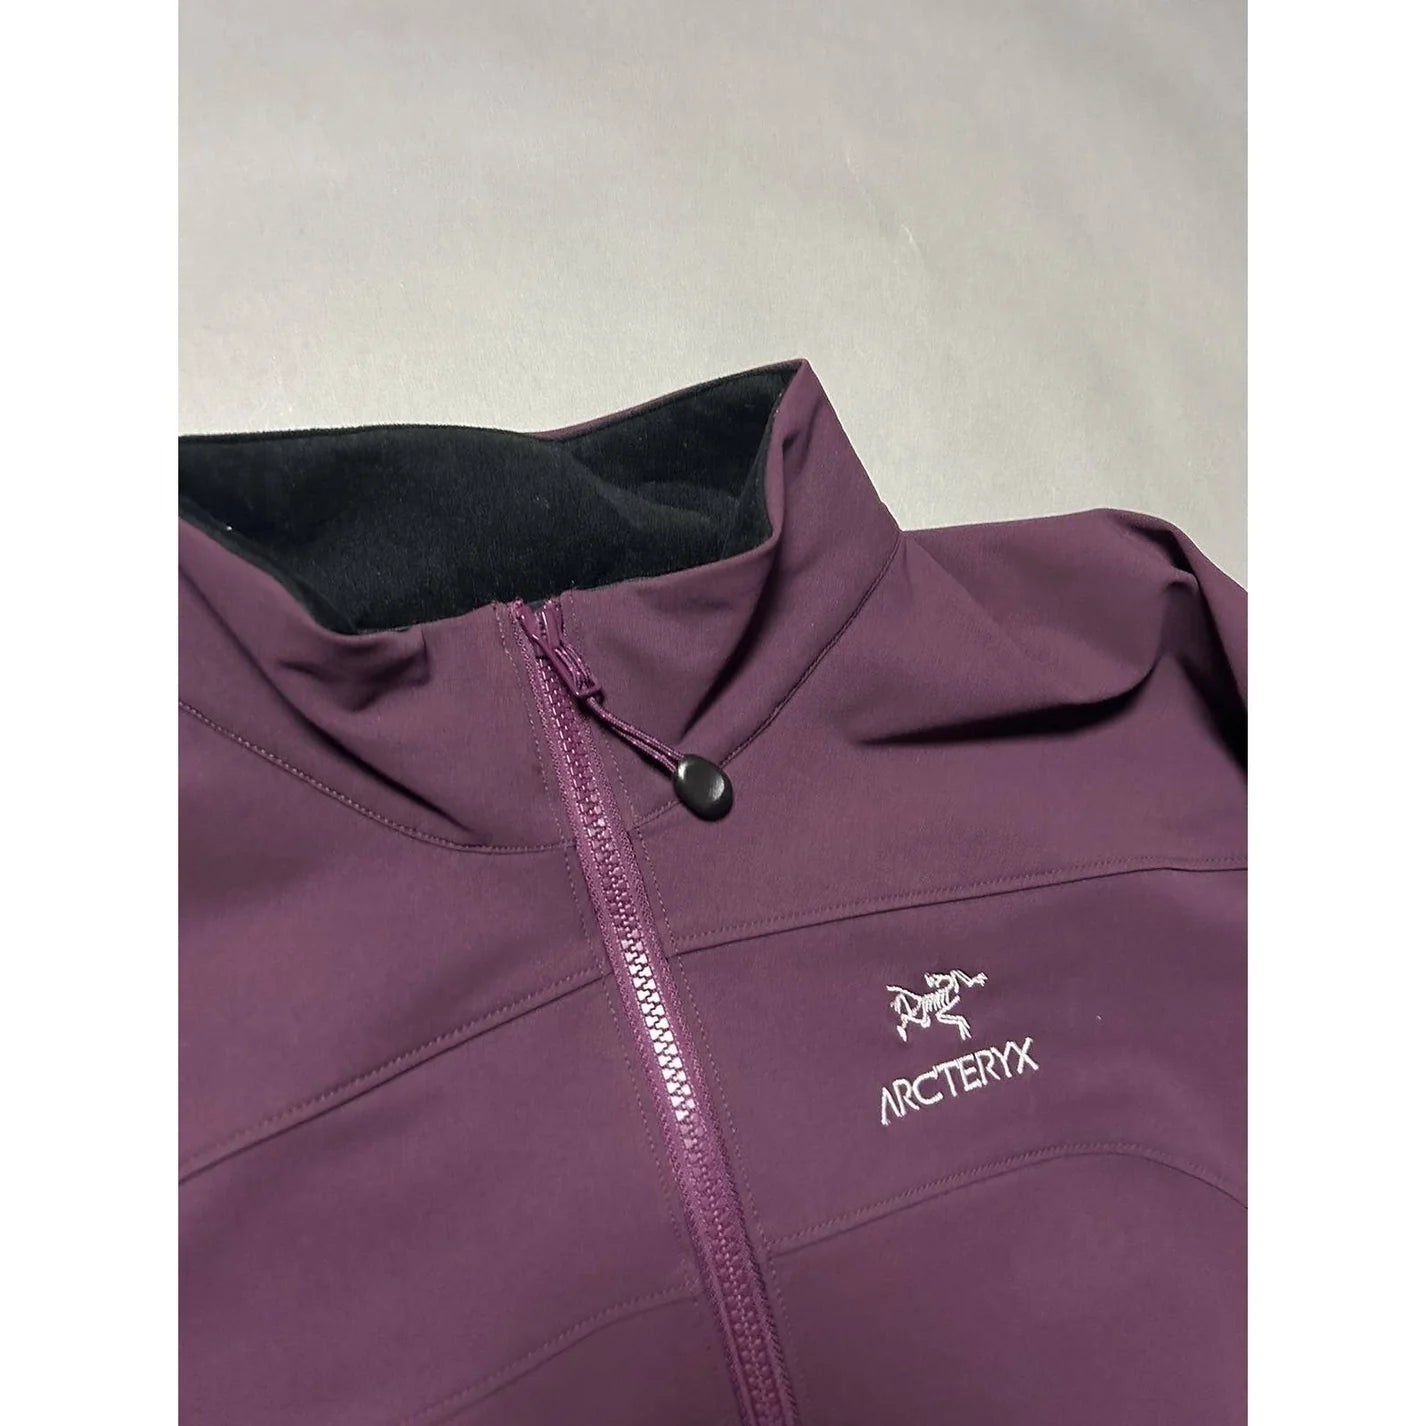 Arc’teryx Jacket Softshell Purple Vintage Lodz Polska Front Logo